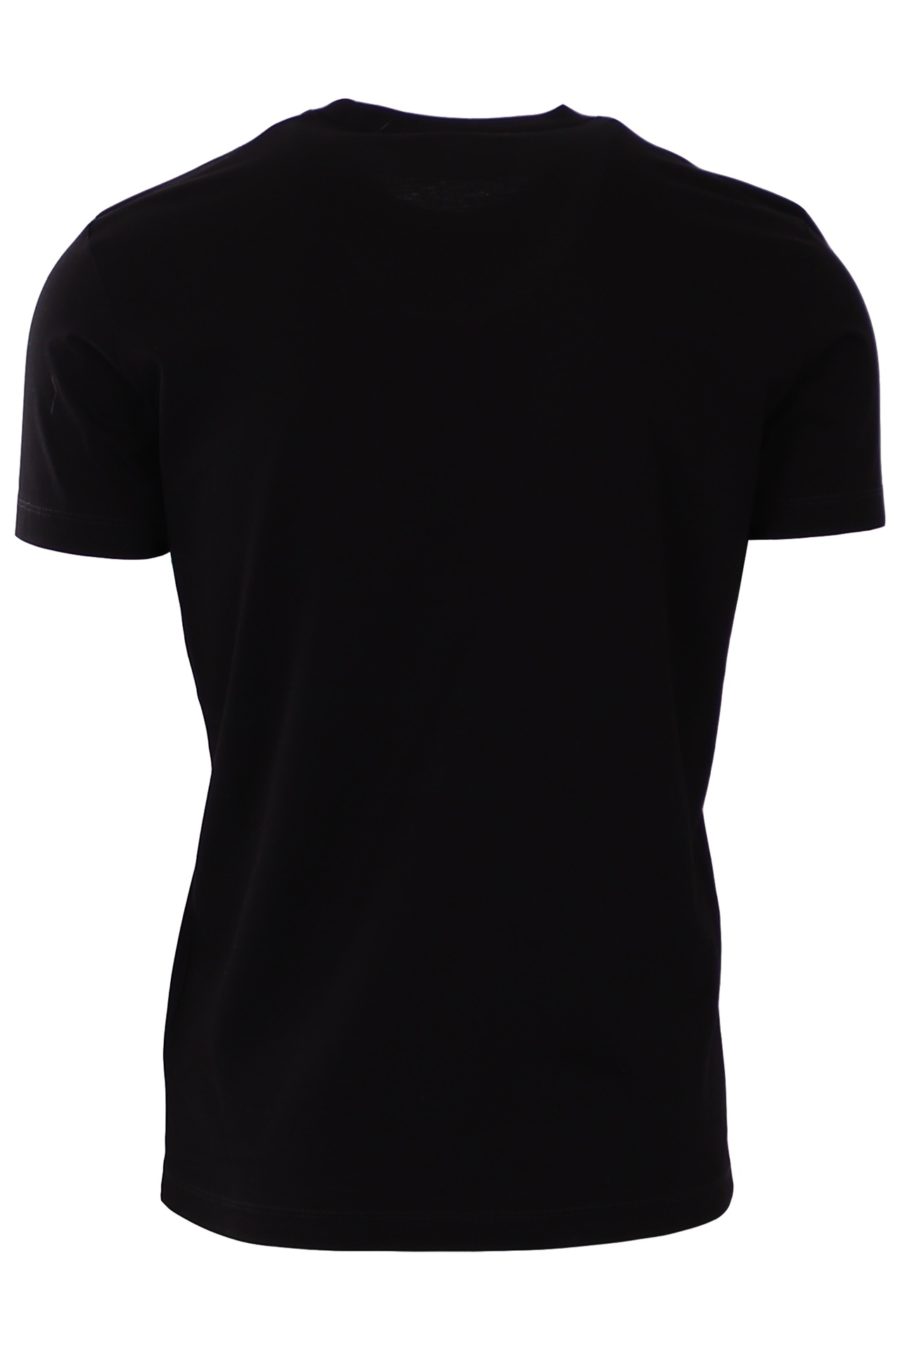 T-shirt Dsquared2 schwarz mit weißem Symbol in der Mitte - e26e2ba549875b76d19d14d1428b44ebe544ff26bb9